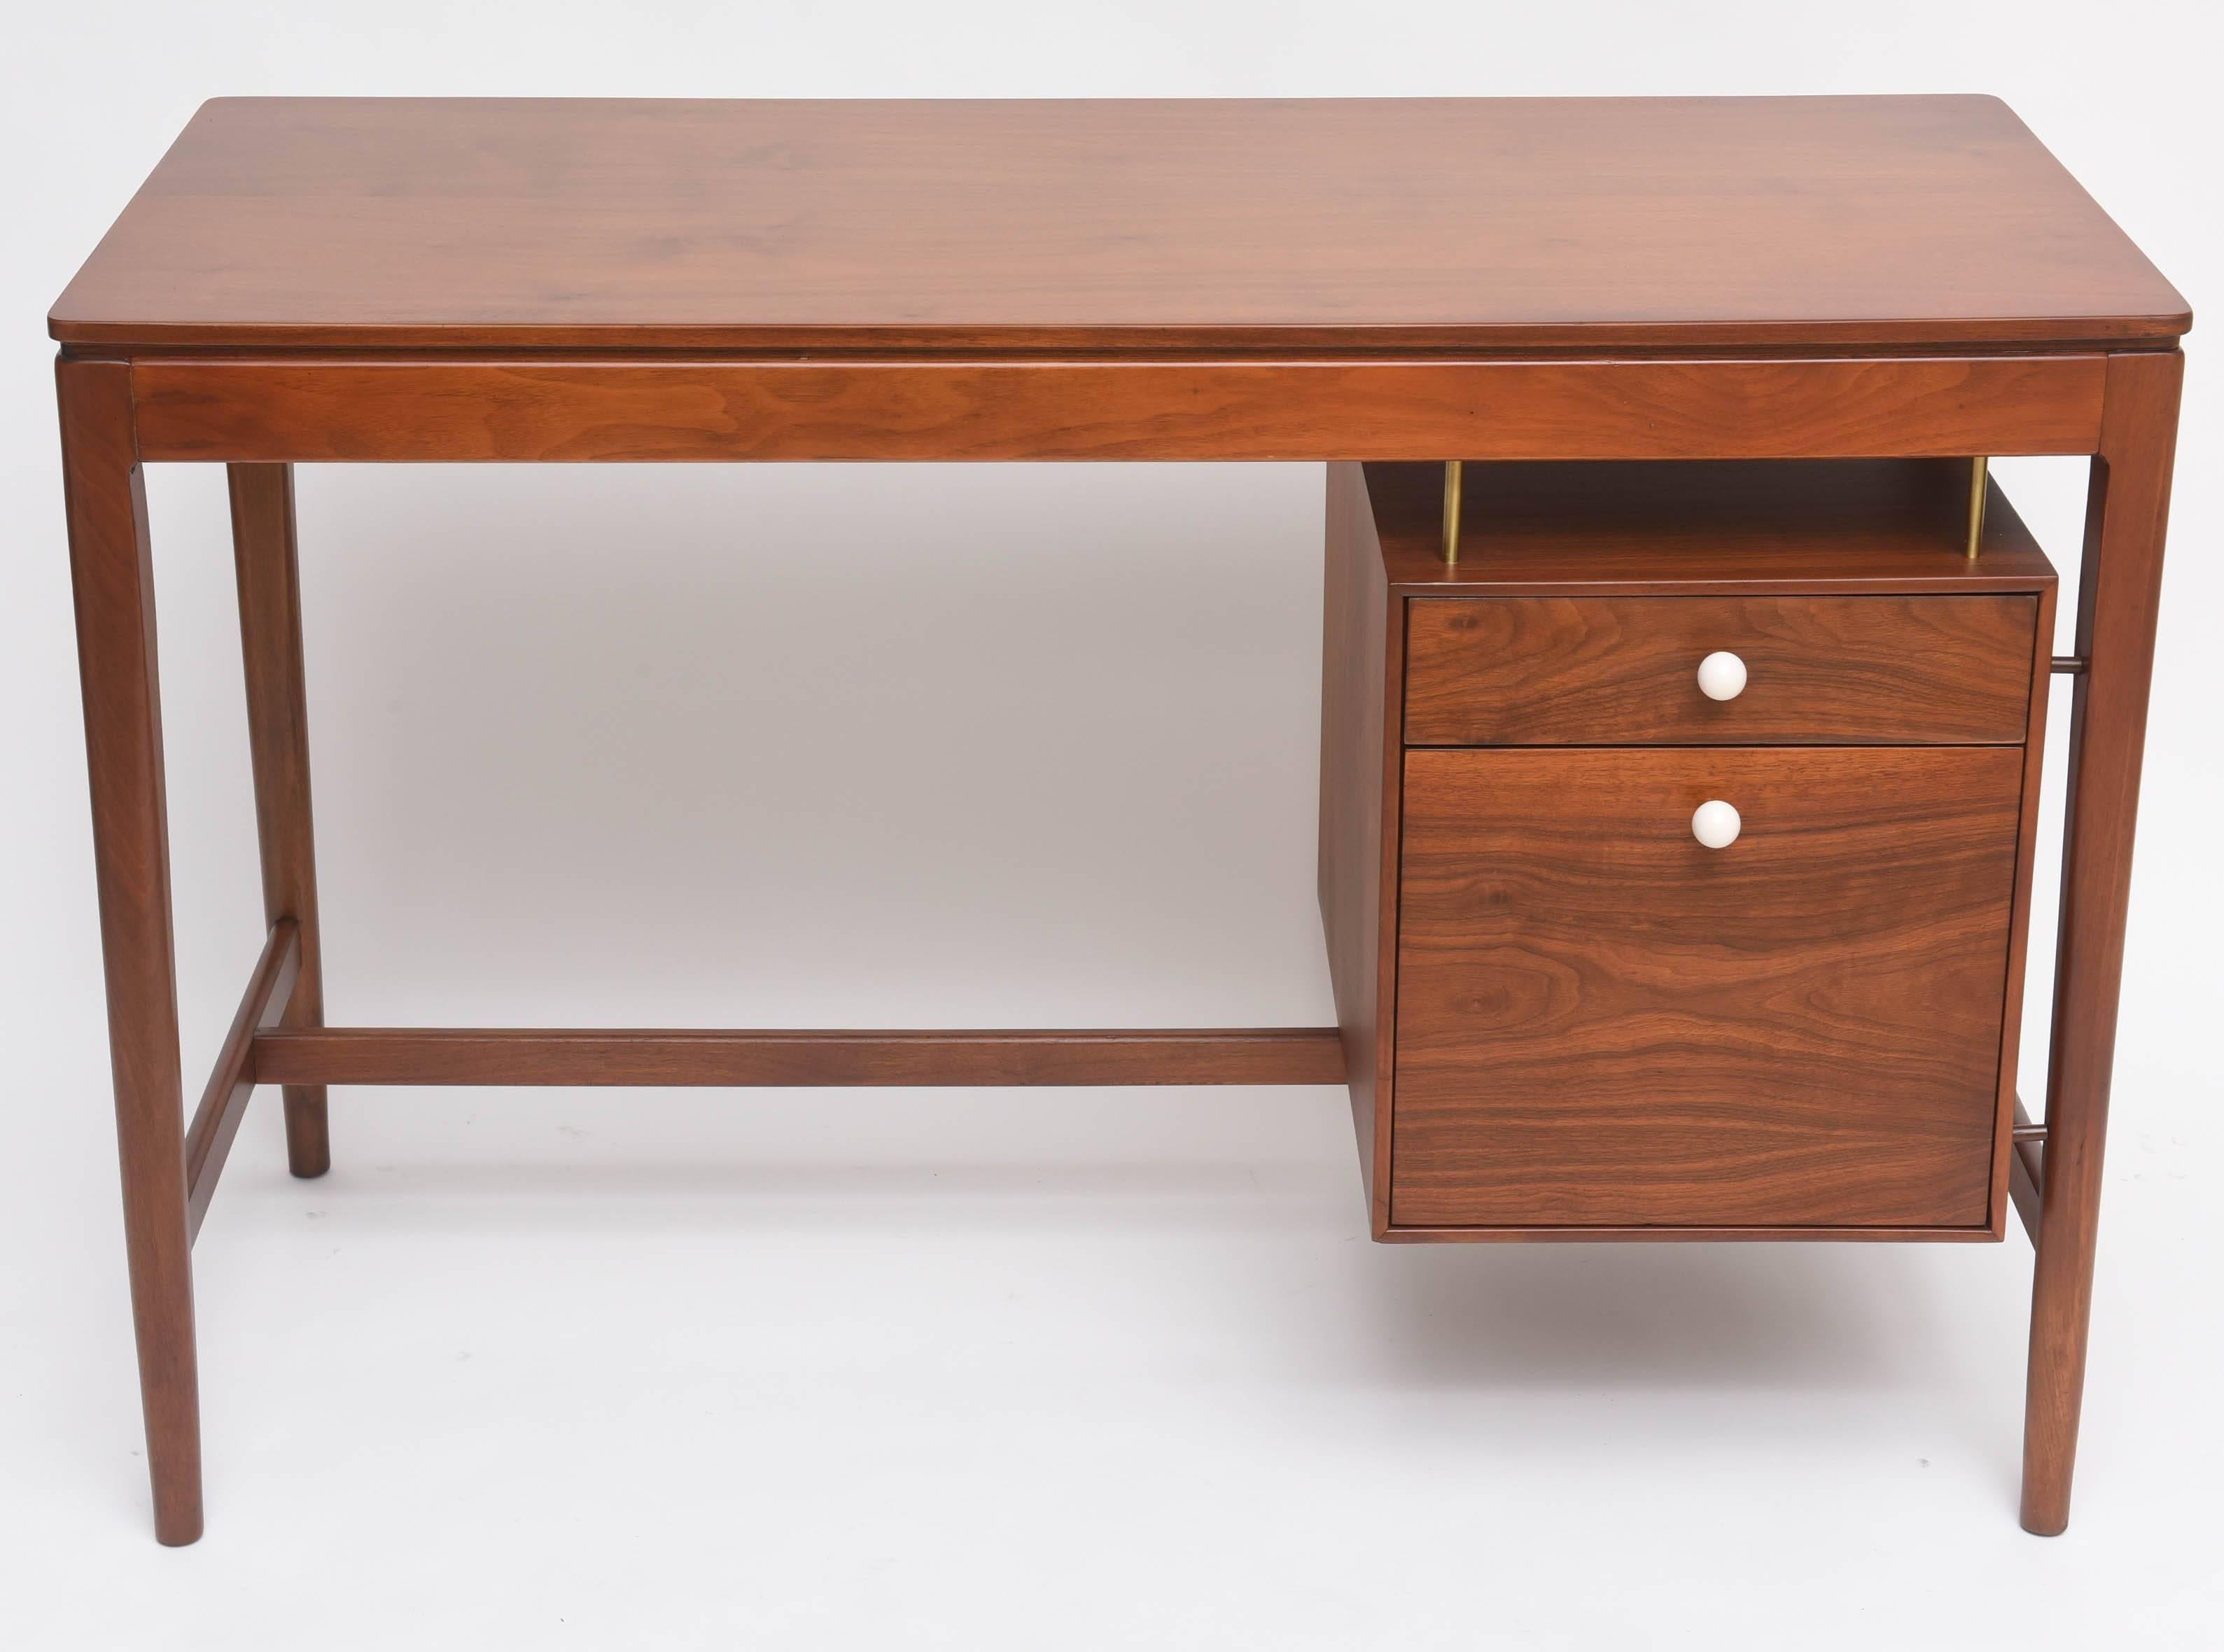 Handsome desk by Kipp Stewart for Drexel. Walnut, with original white ceramic knobs and brass hardware.